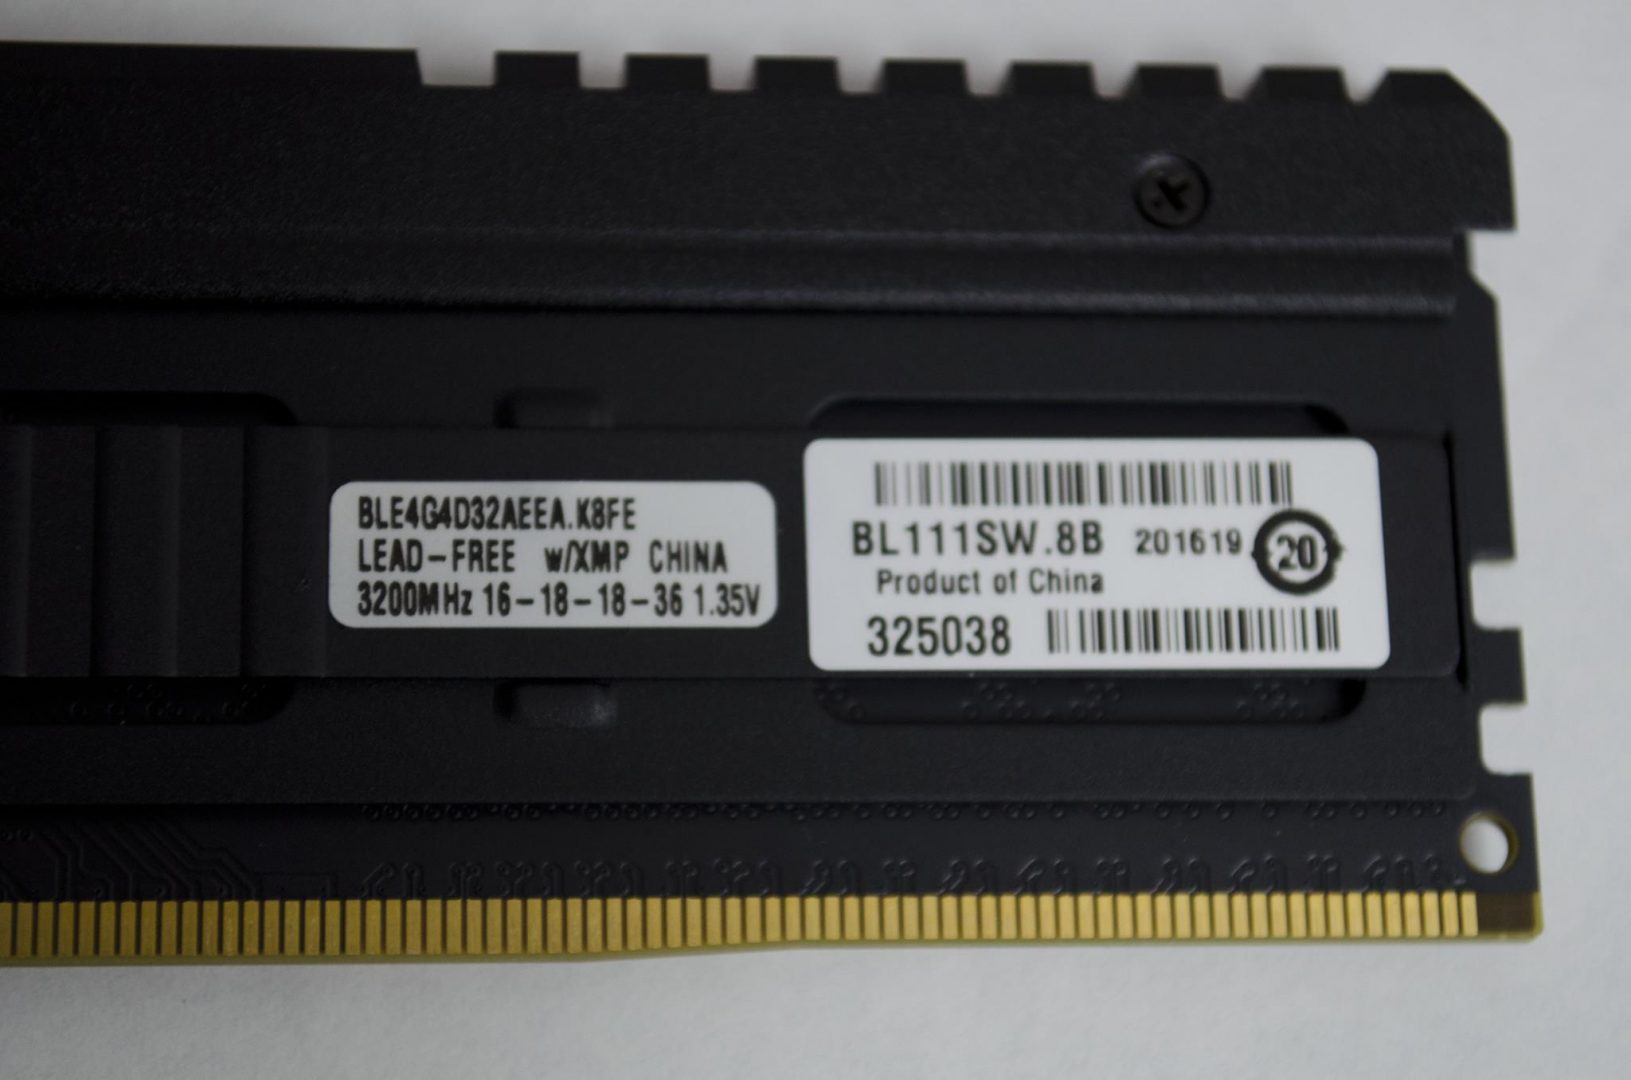 Crucial Ballistix DDR4-3200 C16 2x32GB Review: The Low-Profile